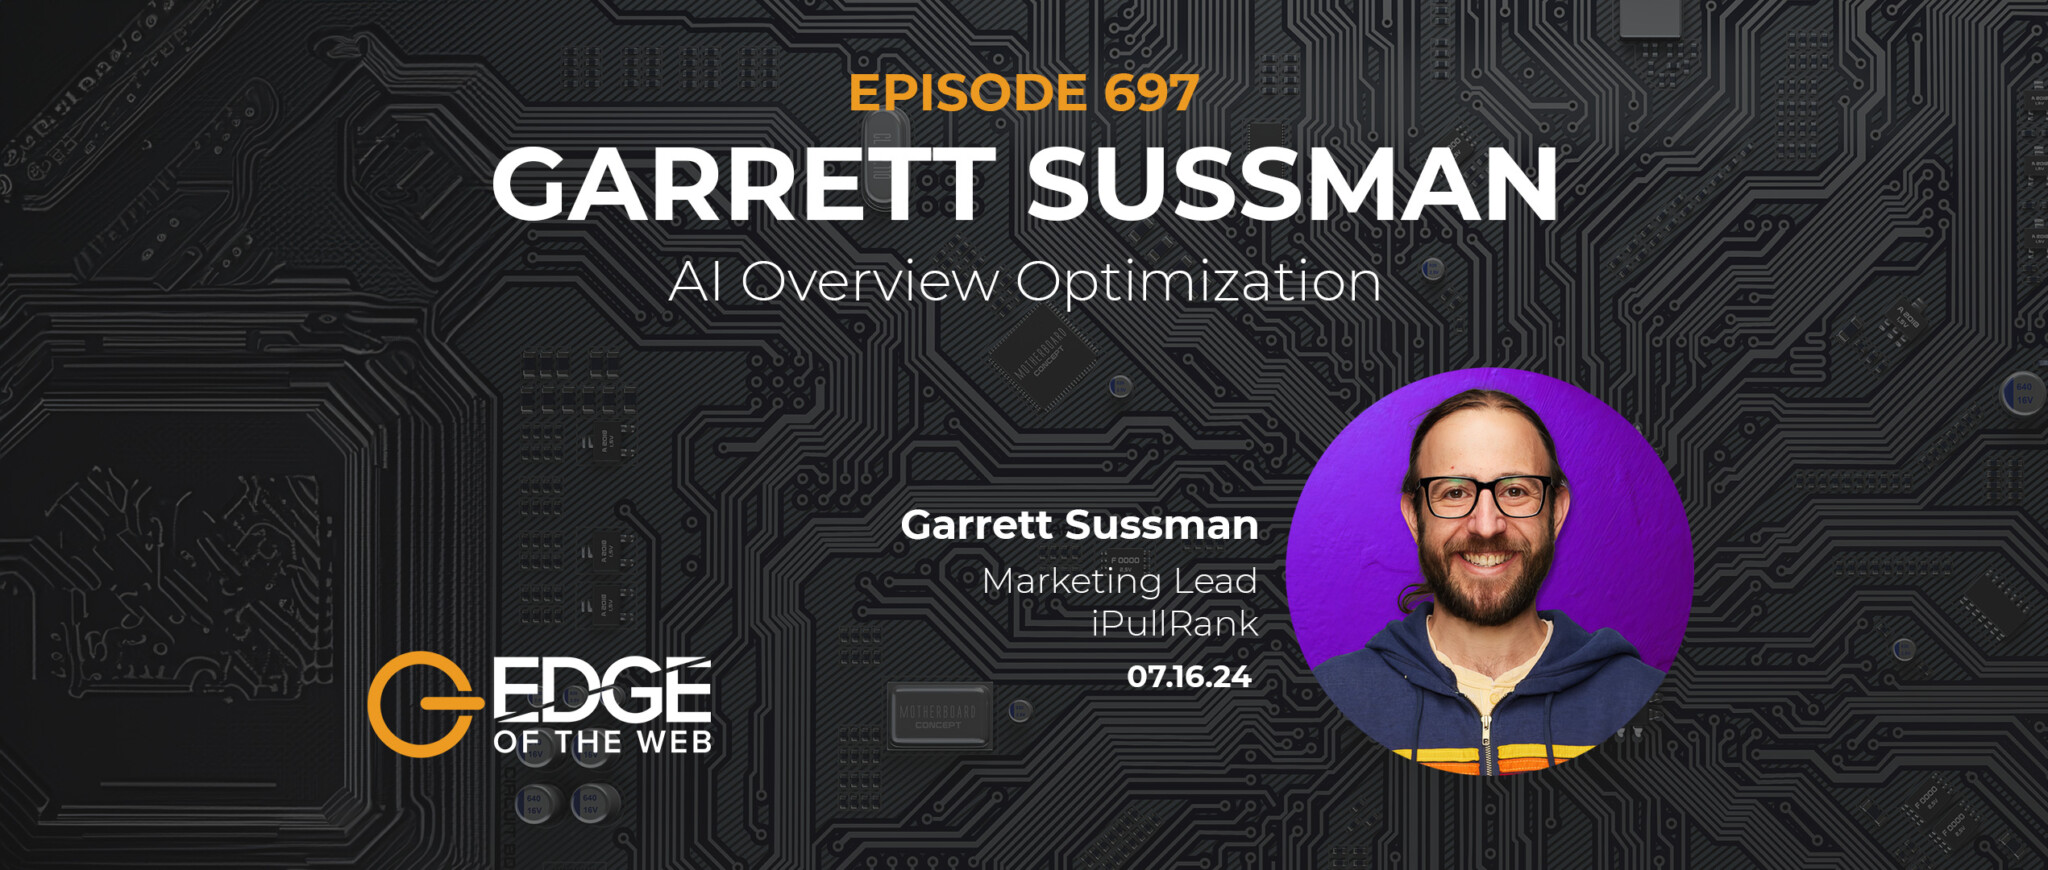 Episode 697: AI Overview Optimization with Garrett Sussman